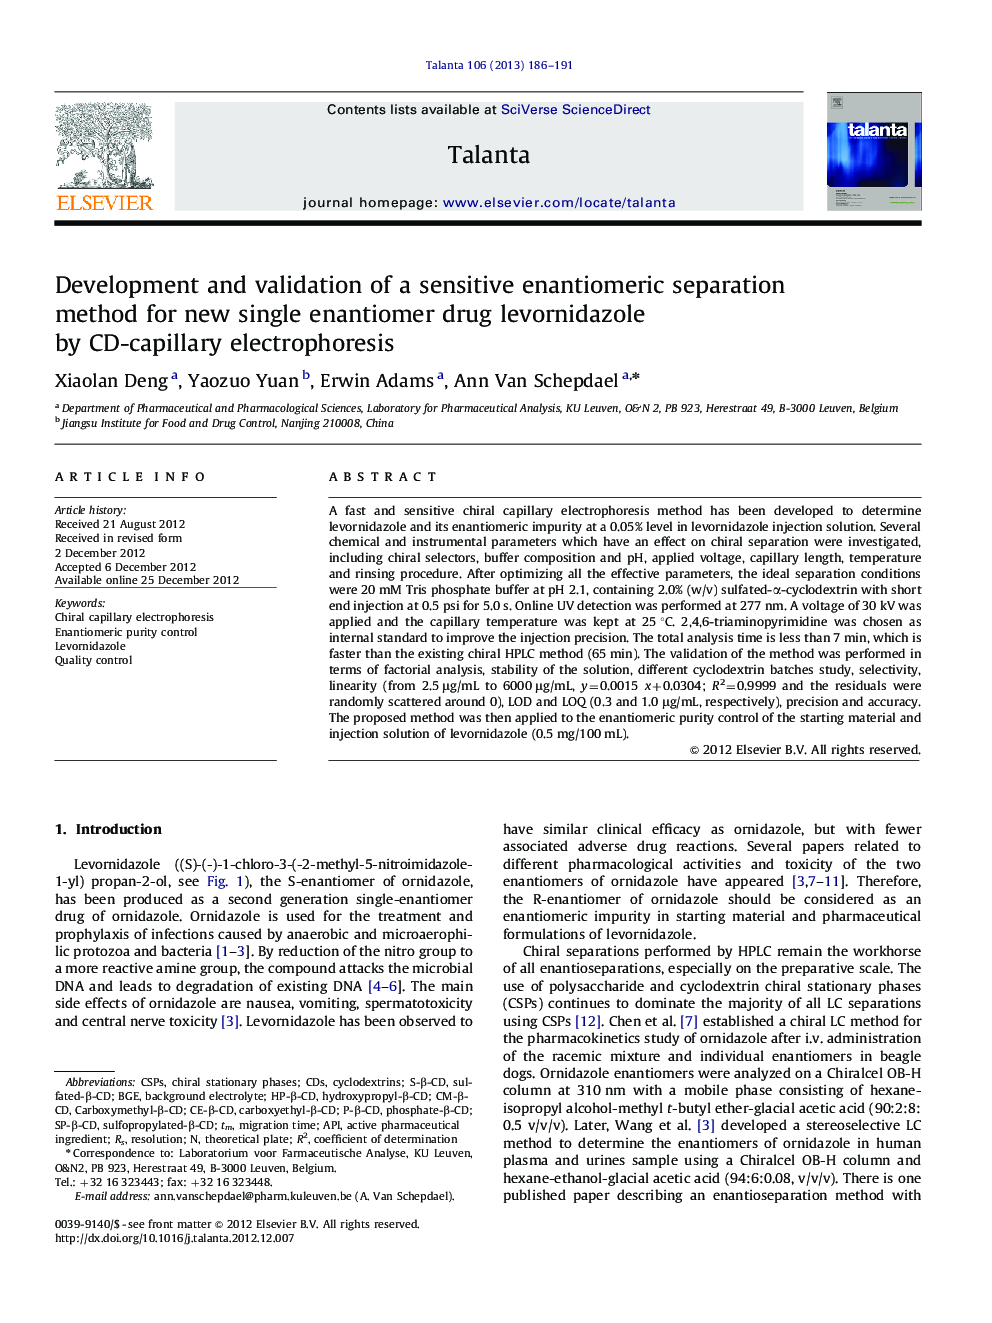 Development and validation of a sensitive enantiomeric separation method for new single enantiomer drug levornidazole by CD-capillary electrophoresis